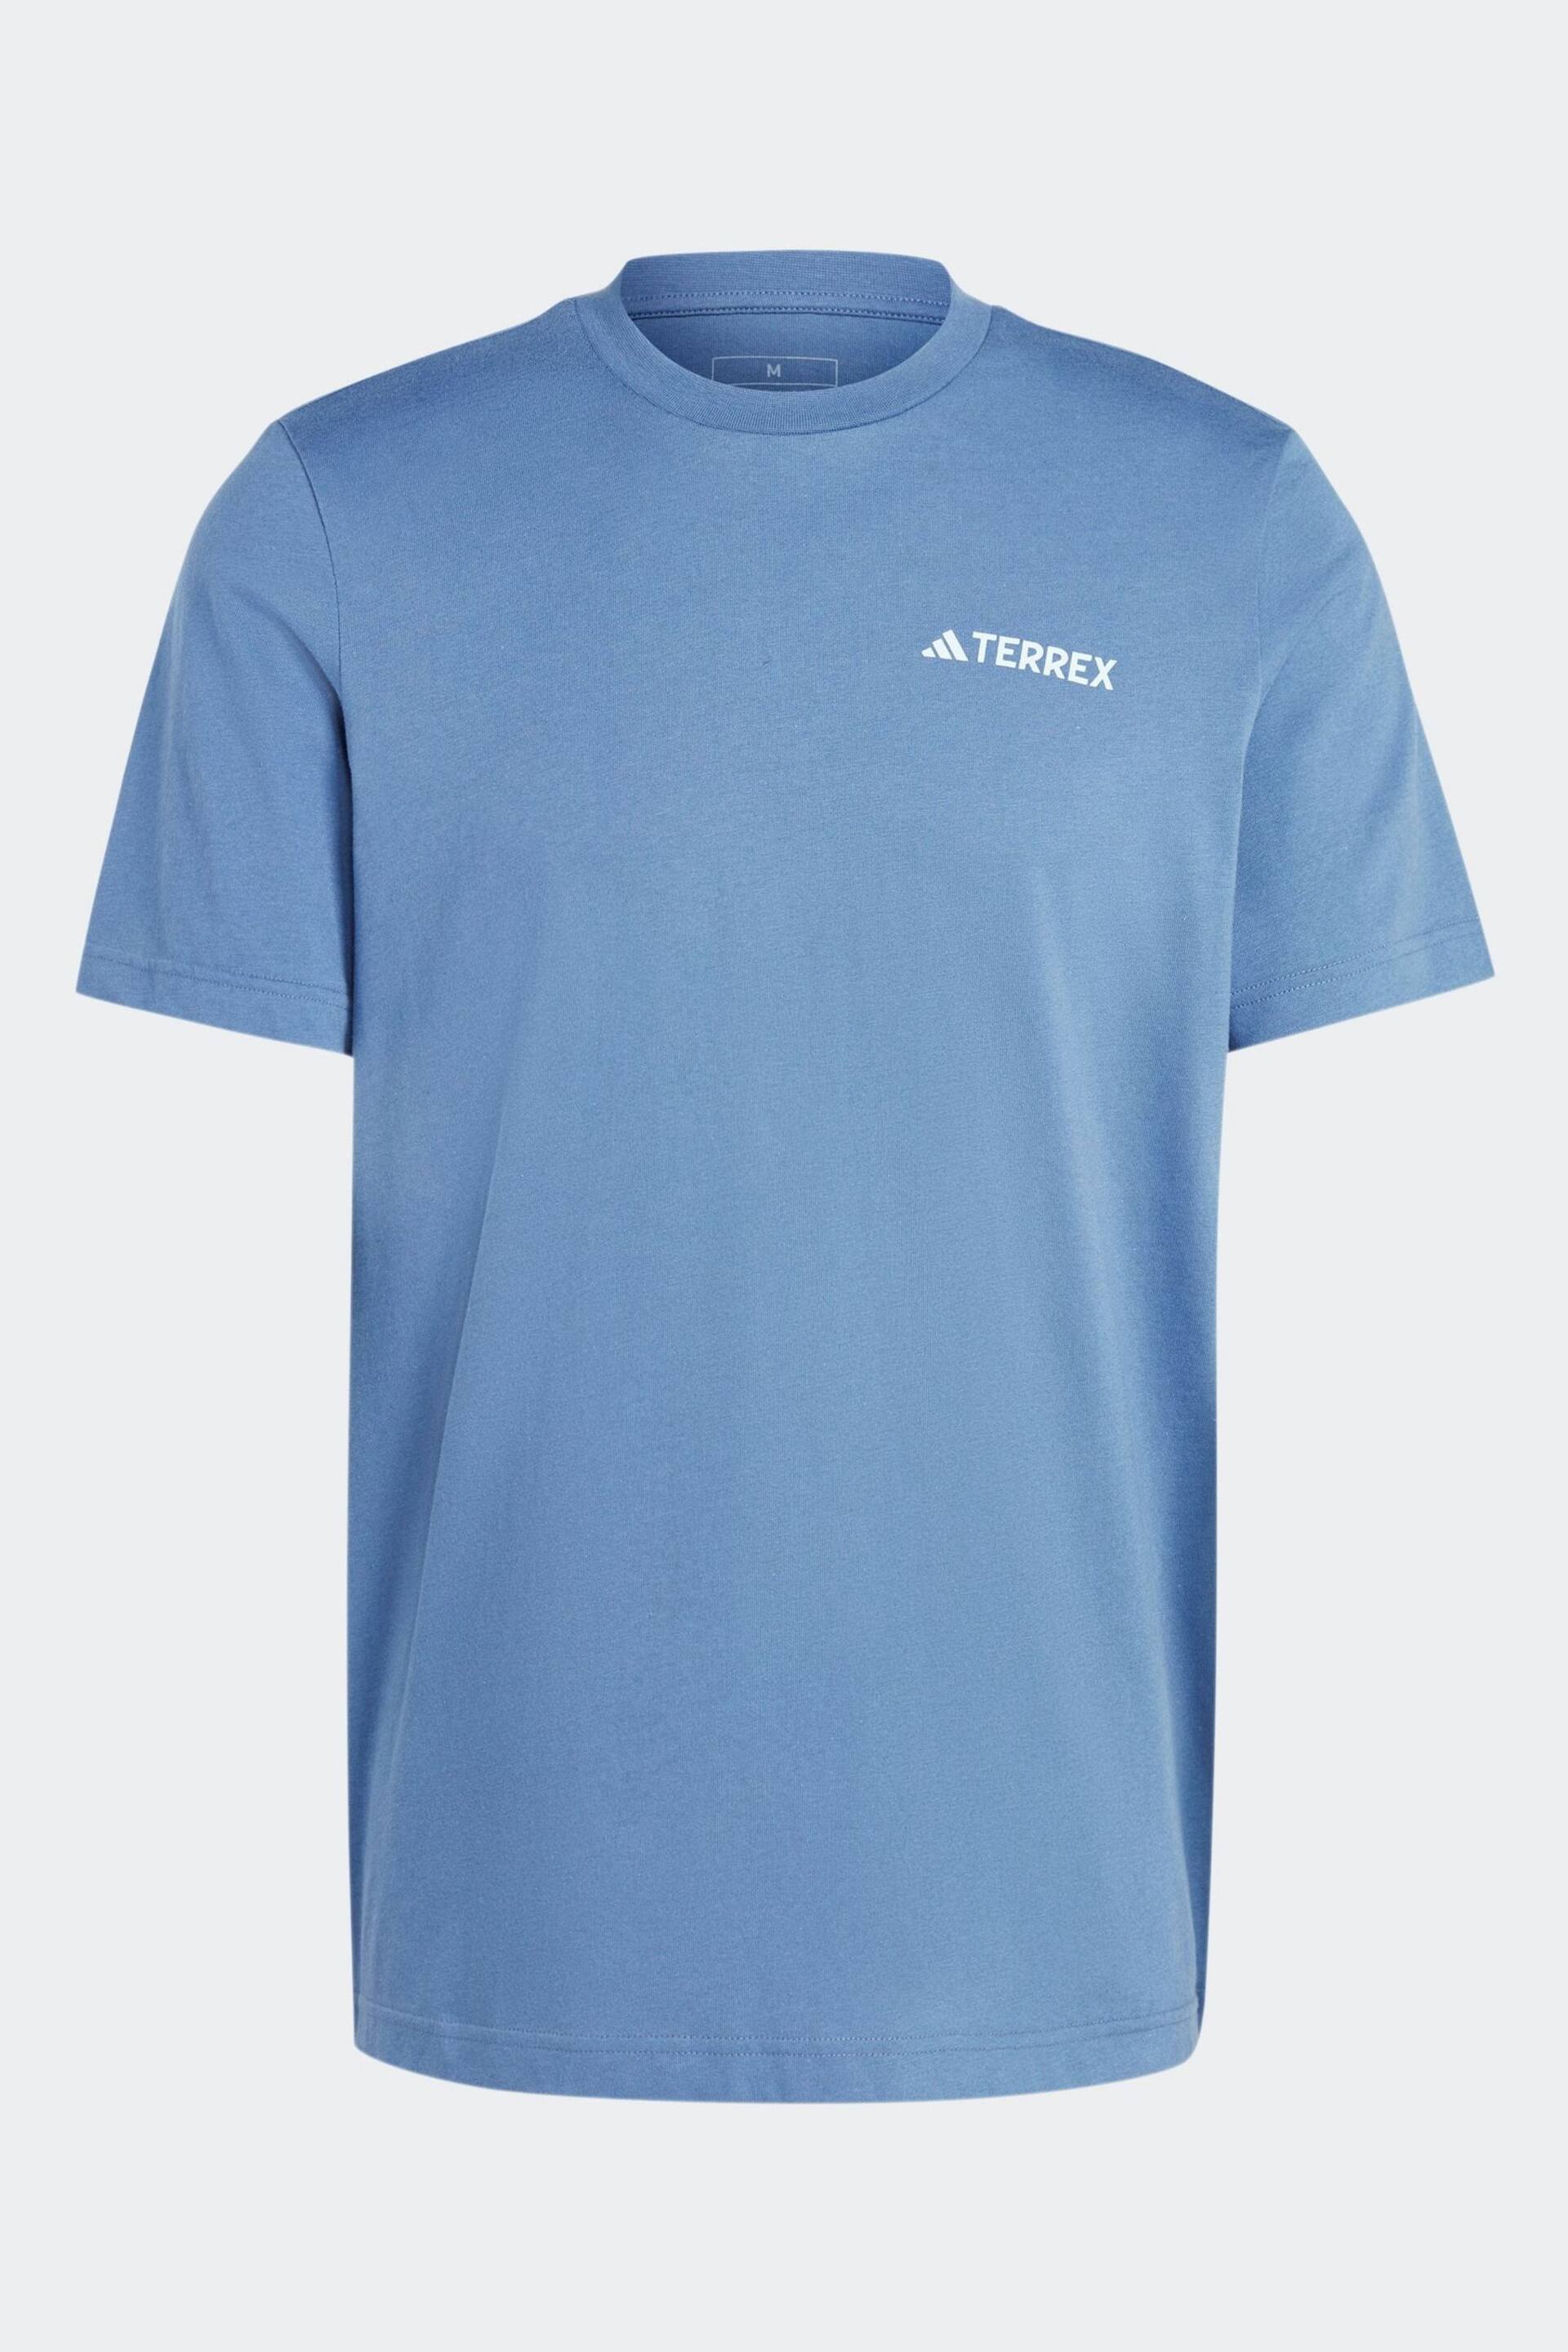 adidas Terrex Khaki Green Graphic T-Shirt - Image 7 of 7